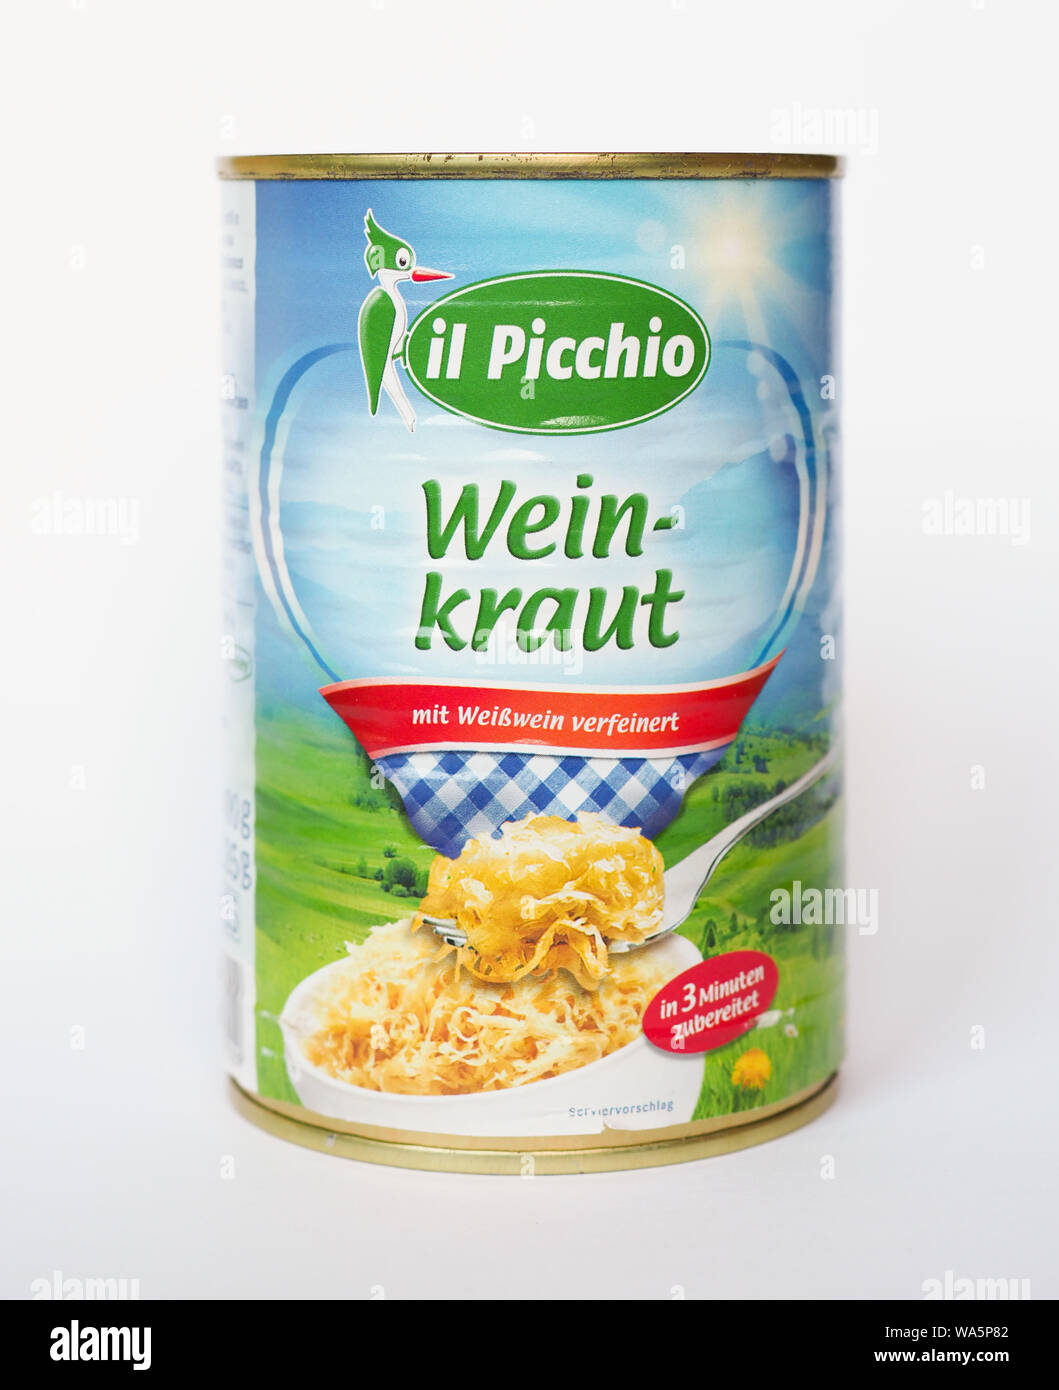 MILAN, ITALY - CIRCA AUGUST 2019: Il Picchio wein-kraut (wine krauts) Stock Photo